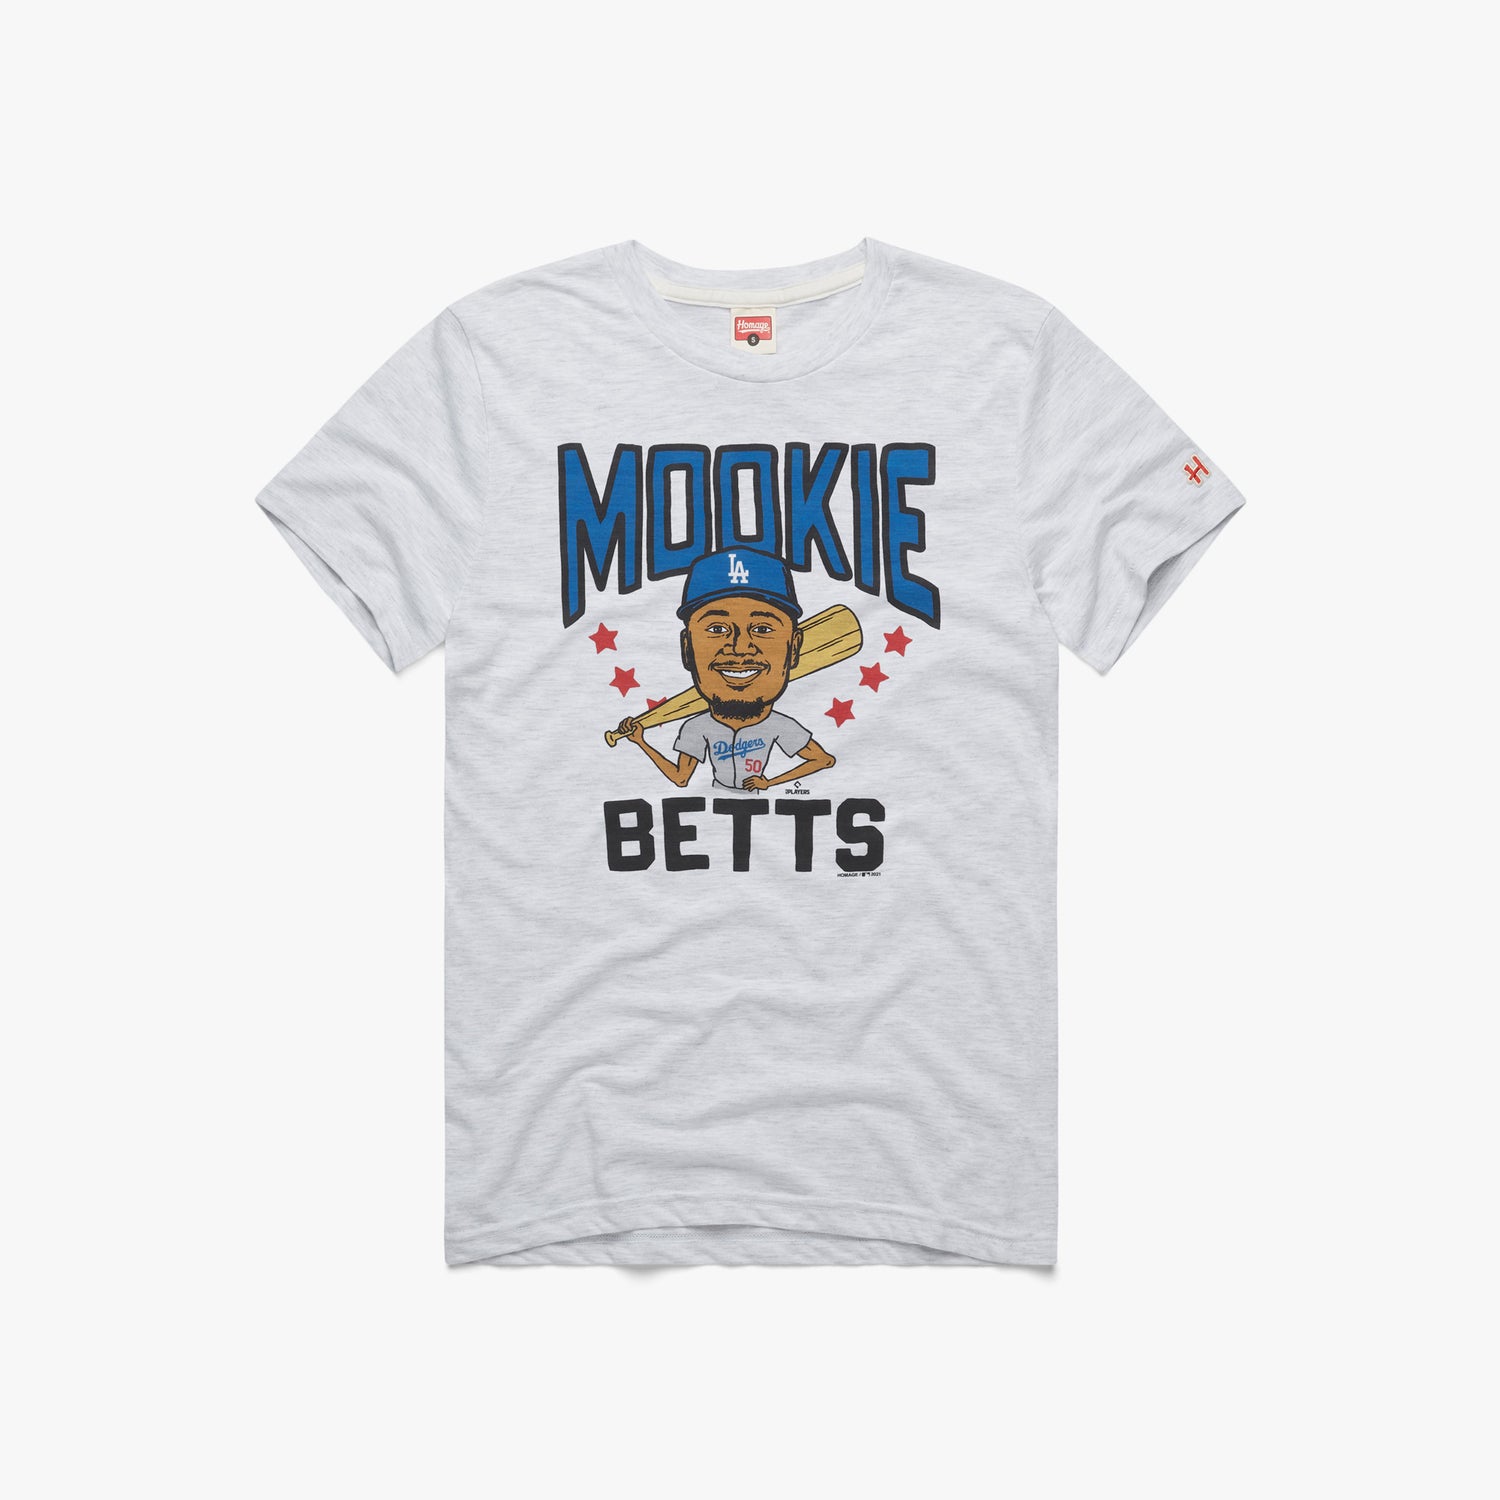 mookie betts bowling shirt